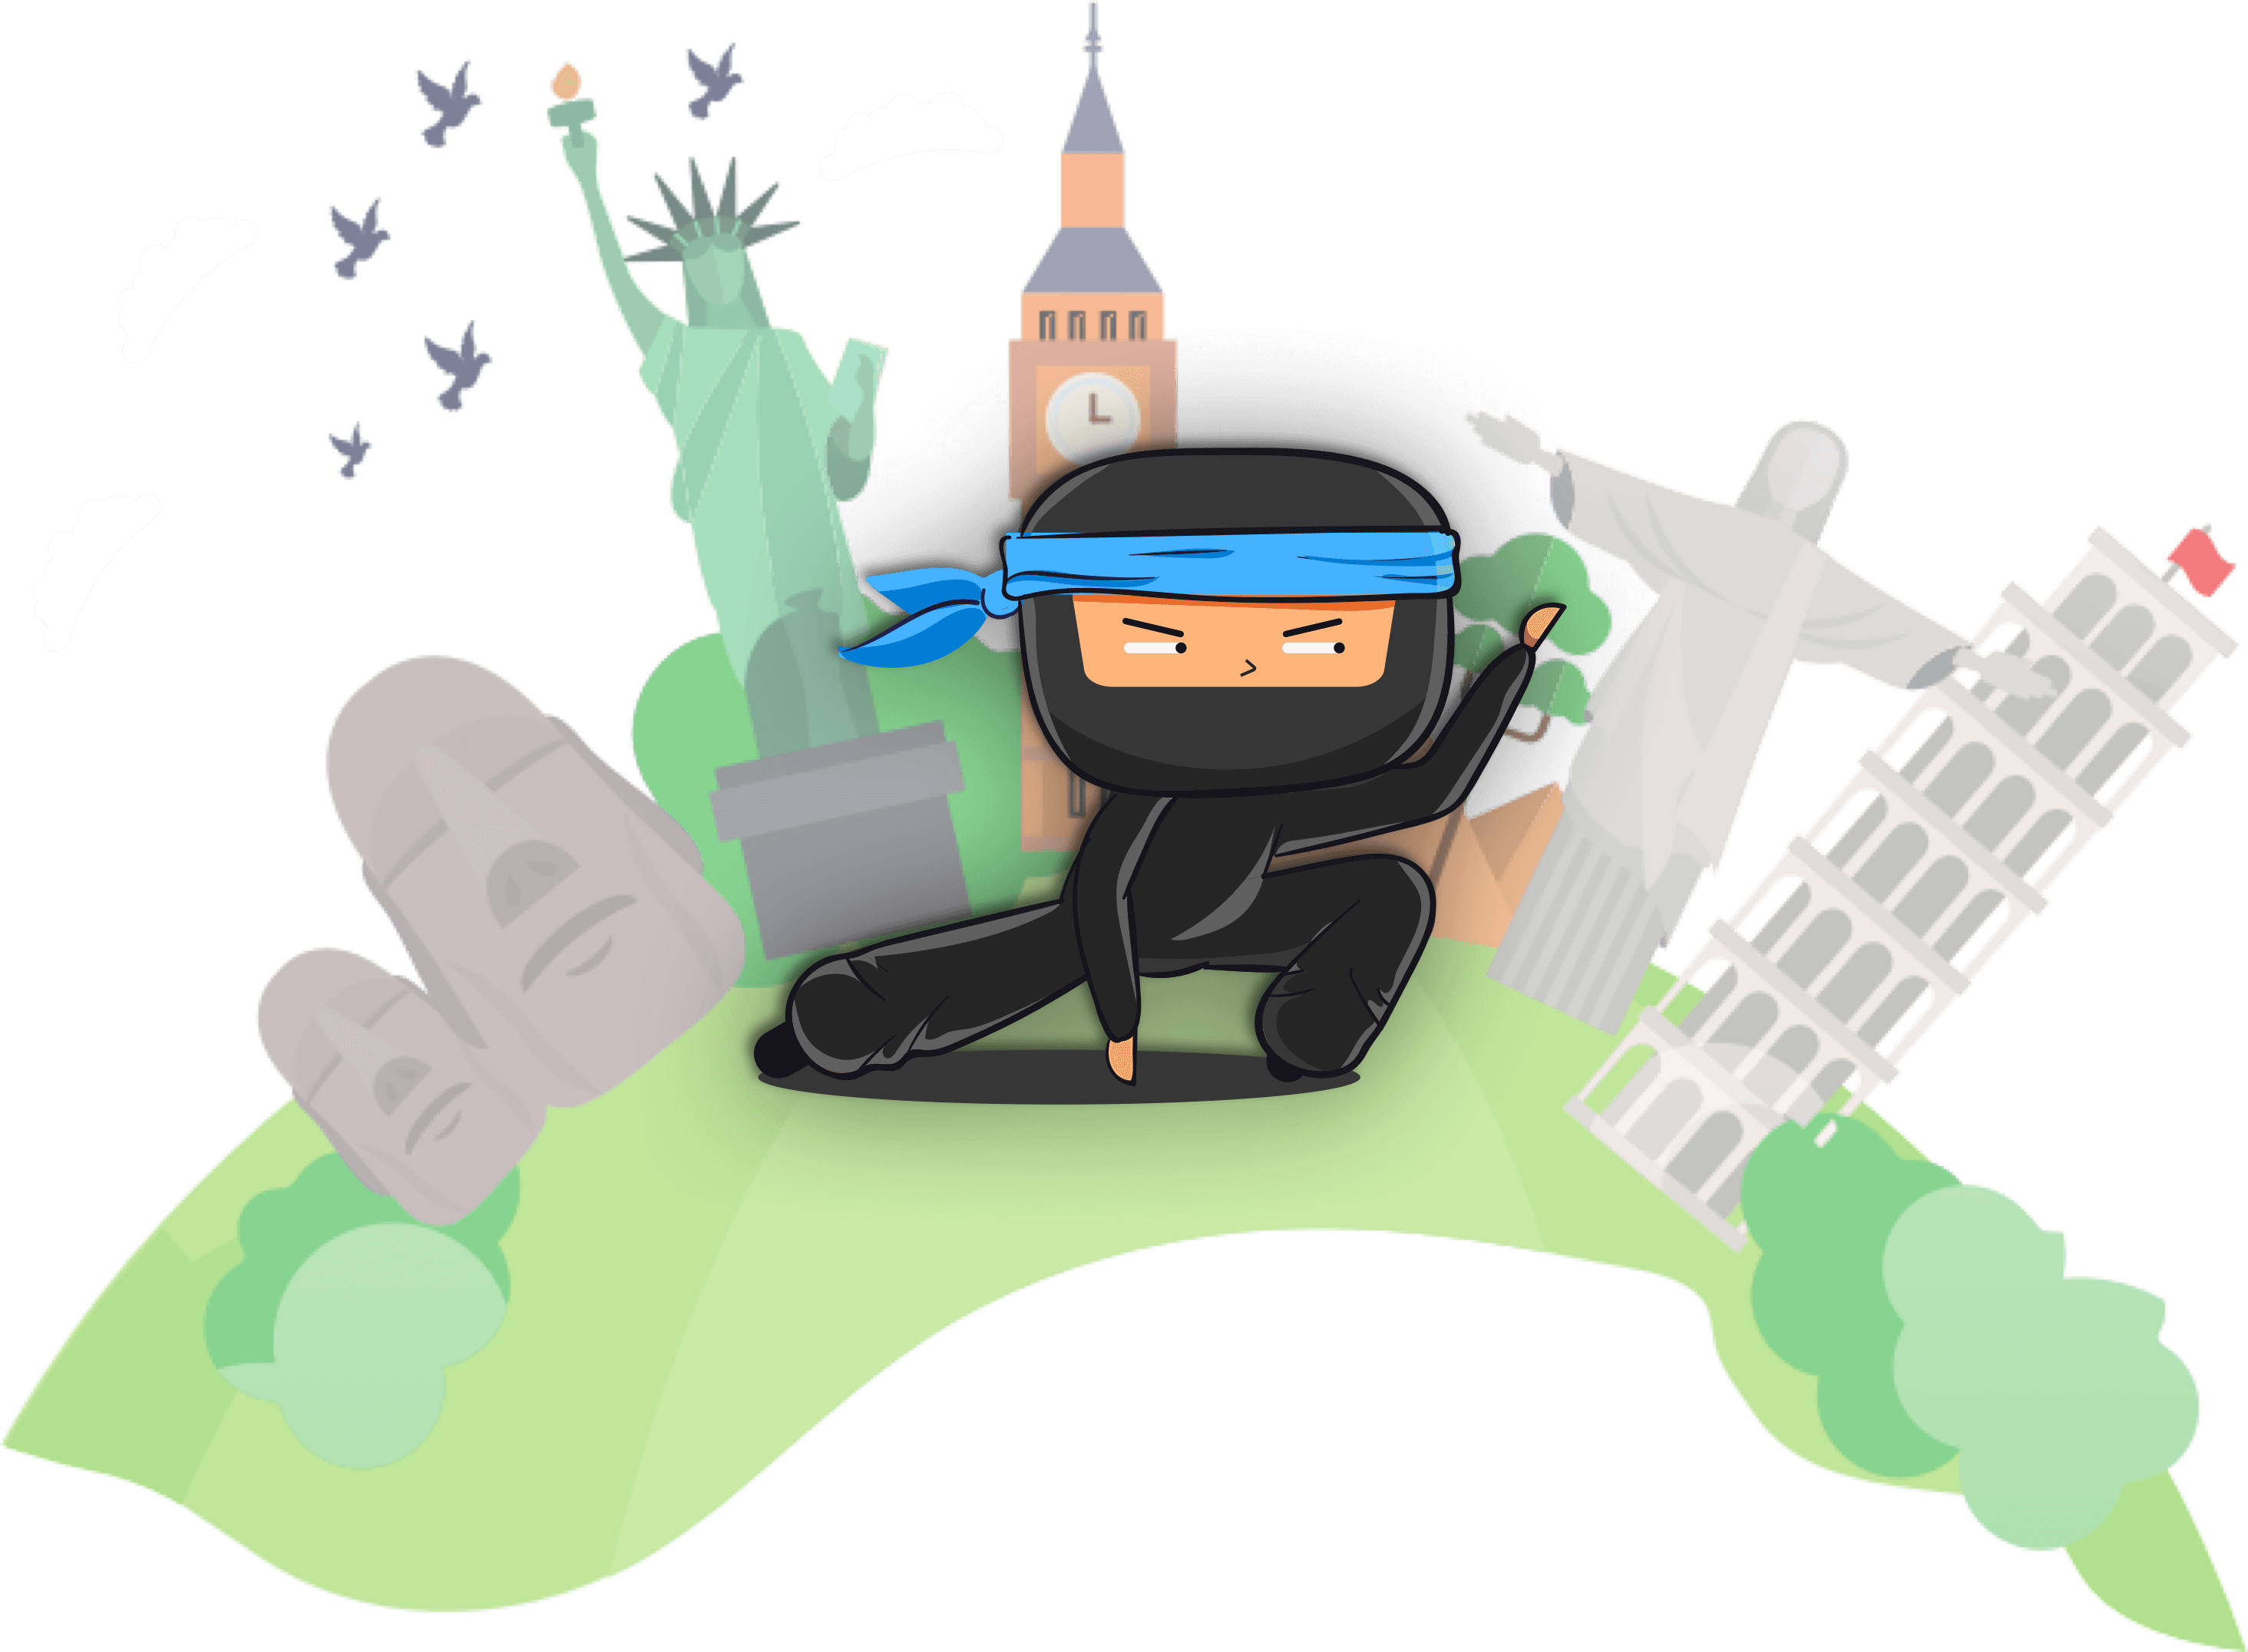 The VPNCity ninja in front of famous landmarks.